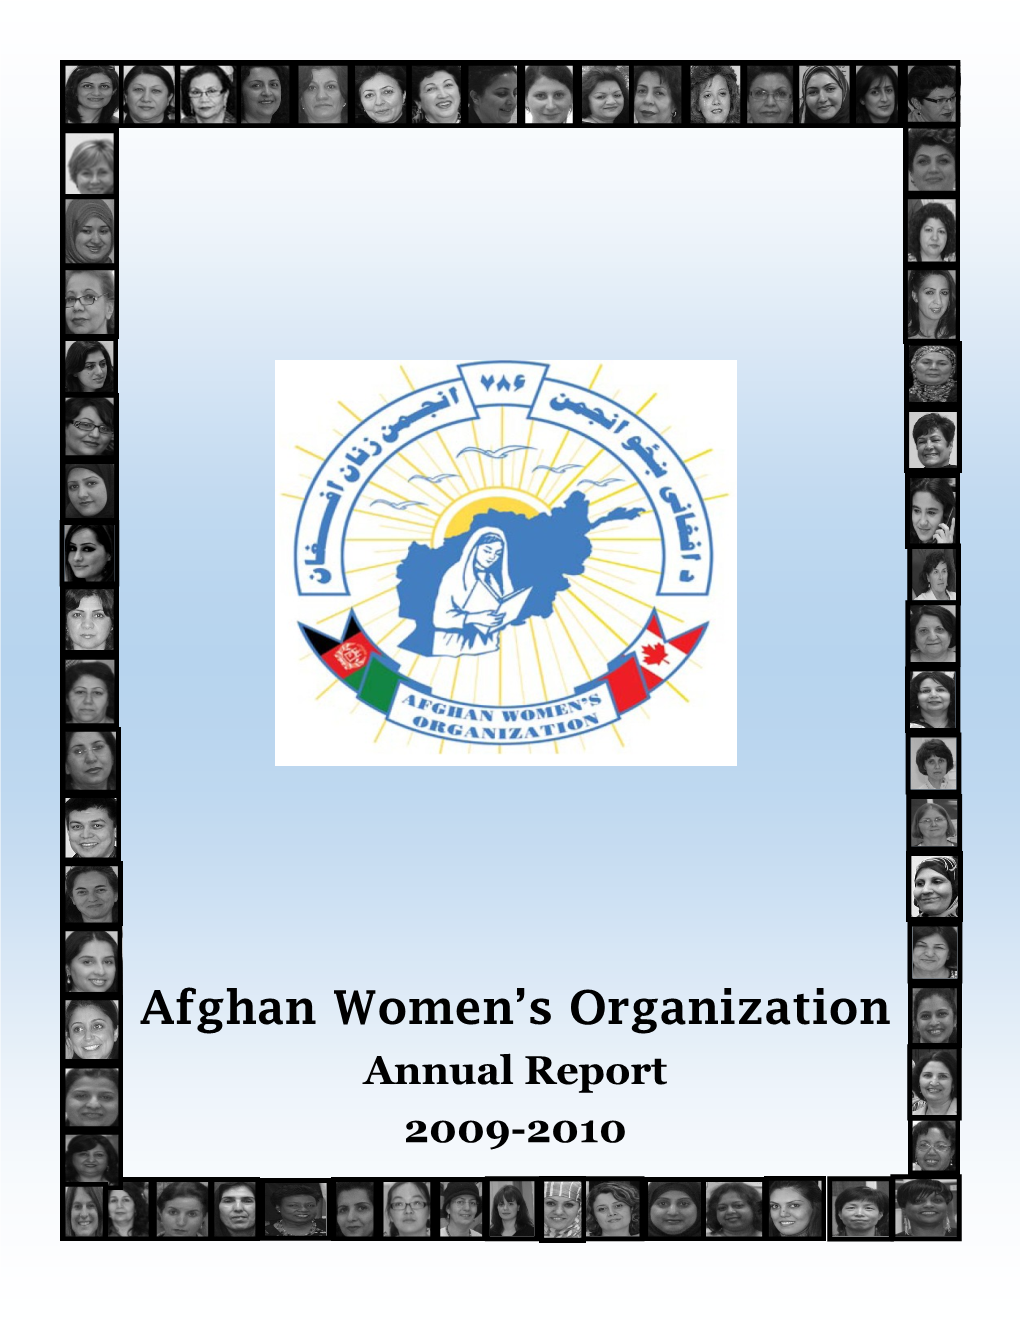 AWO's 2009-2010 Annual Report